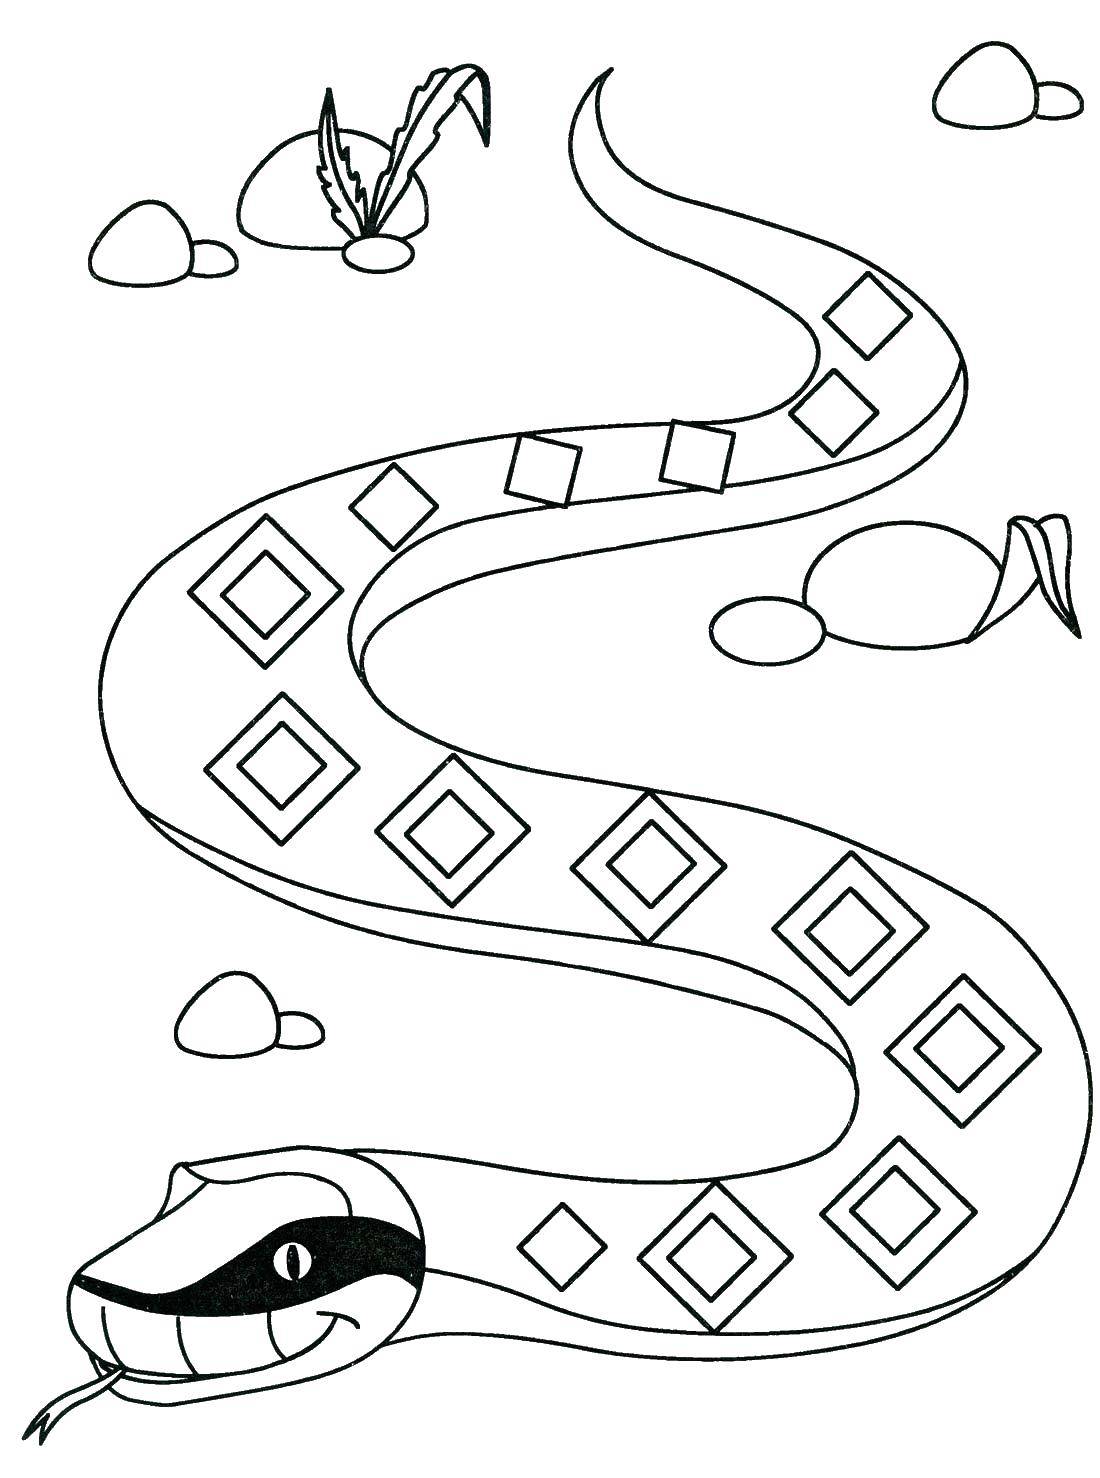 Coloring Snake with diamonds. Category the snake. Tags:  snake, stones, diamond.